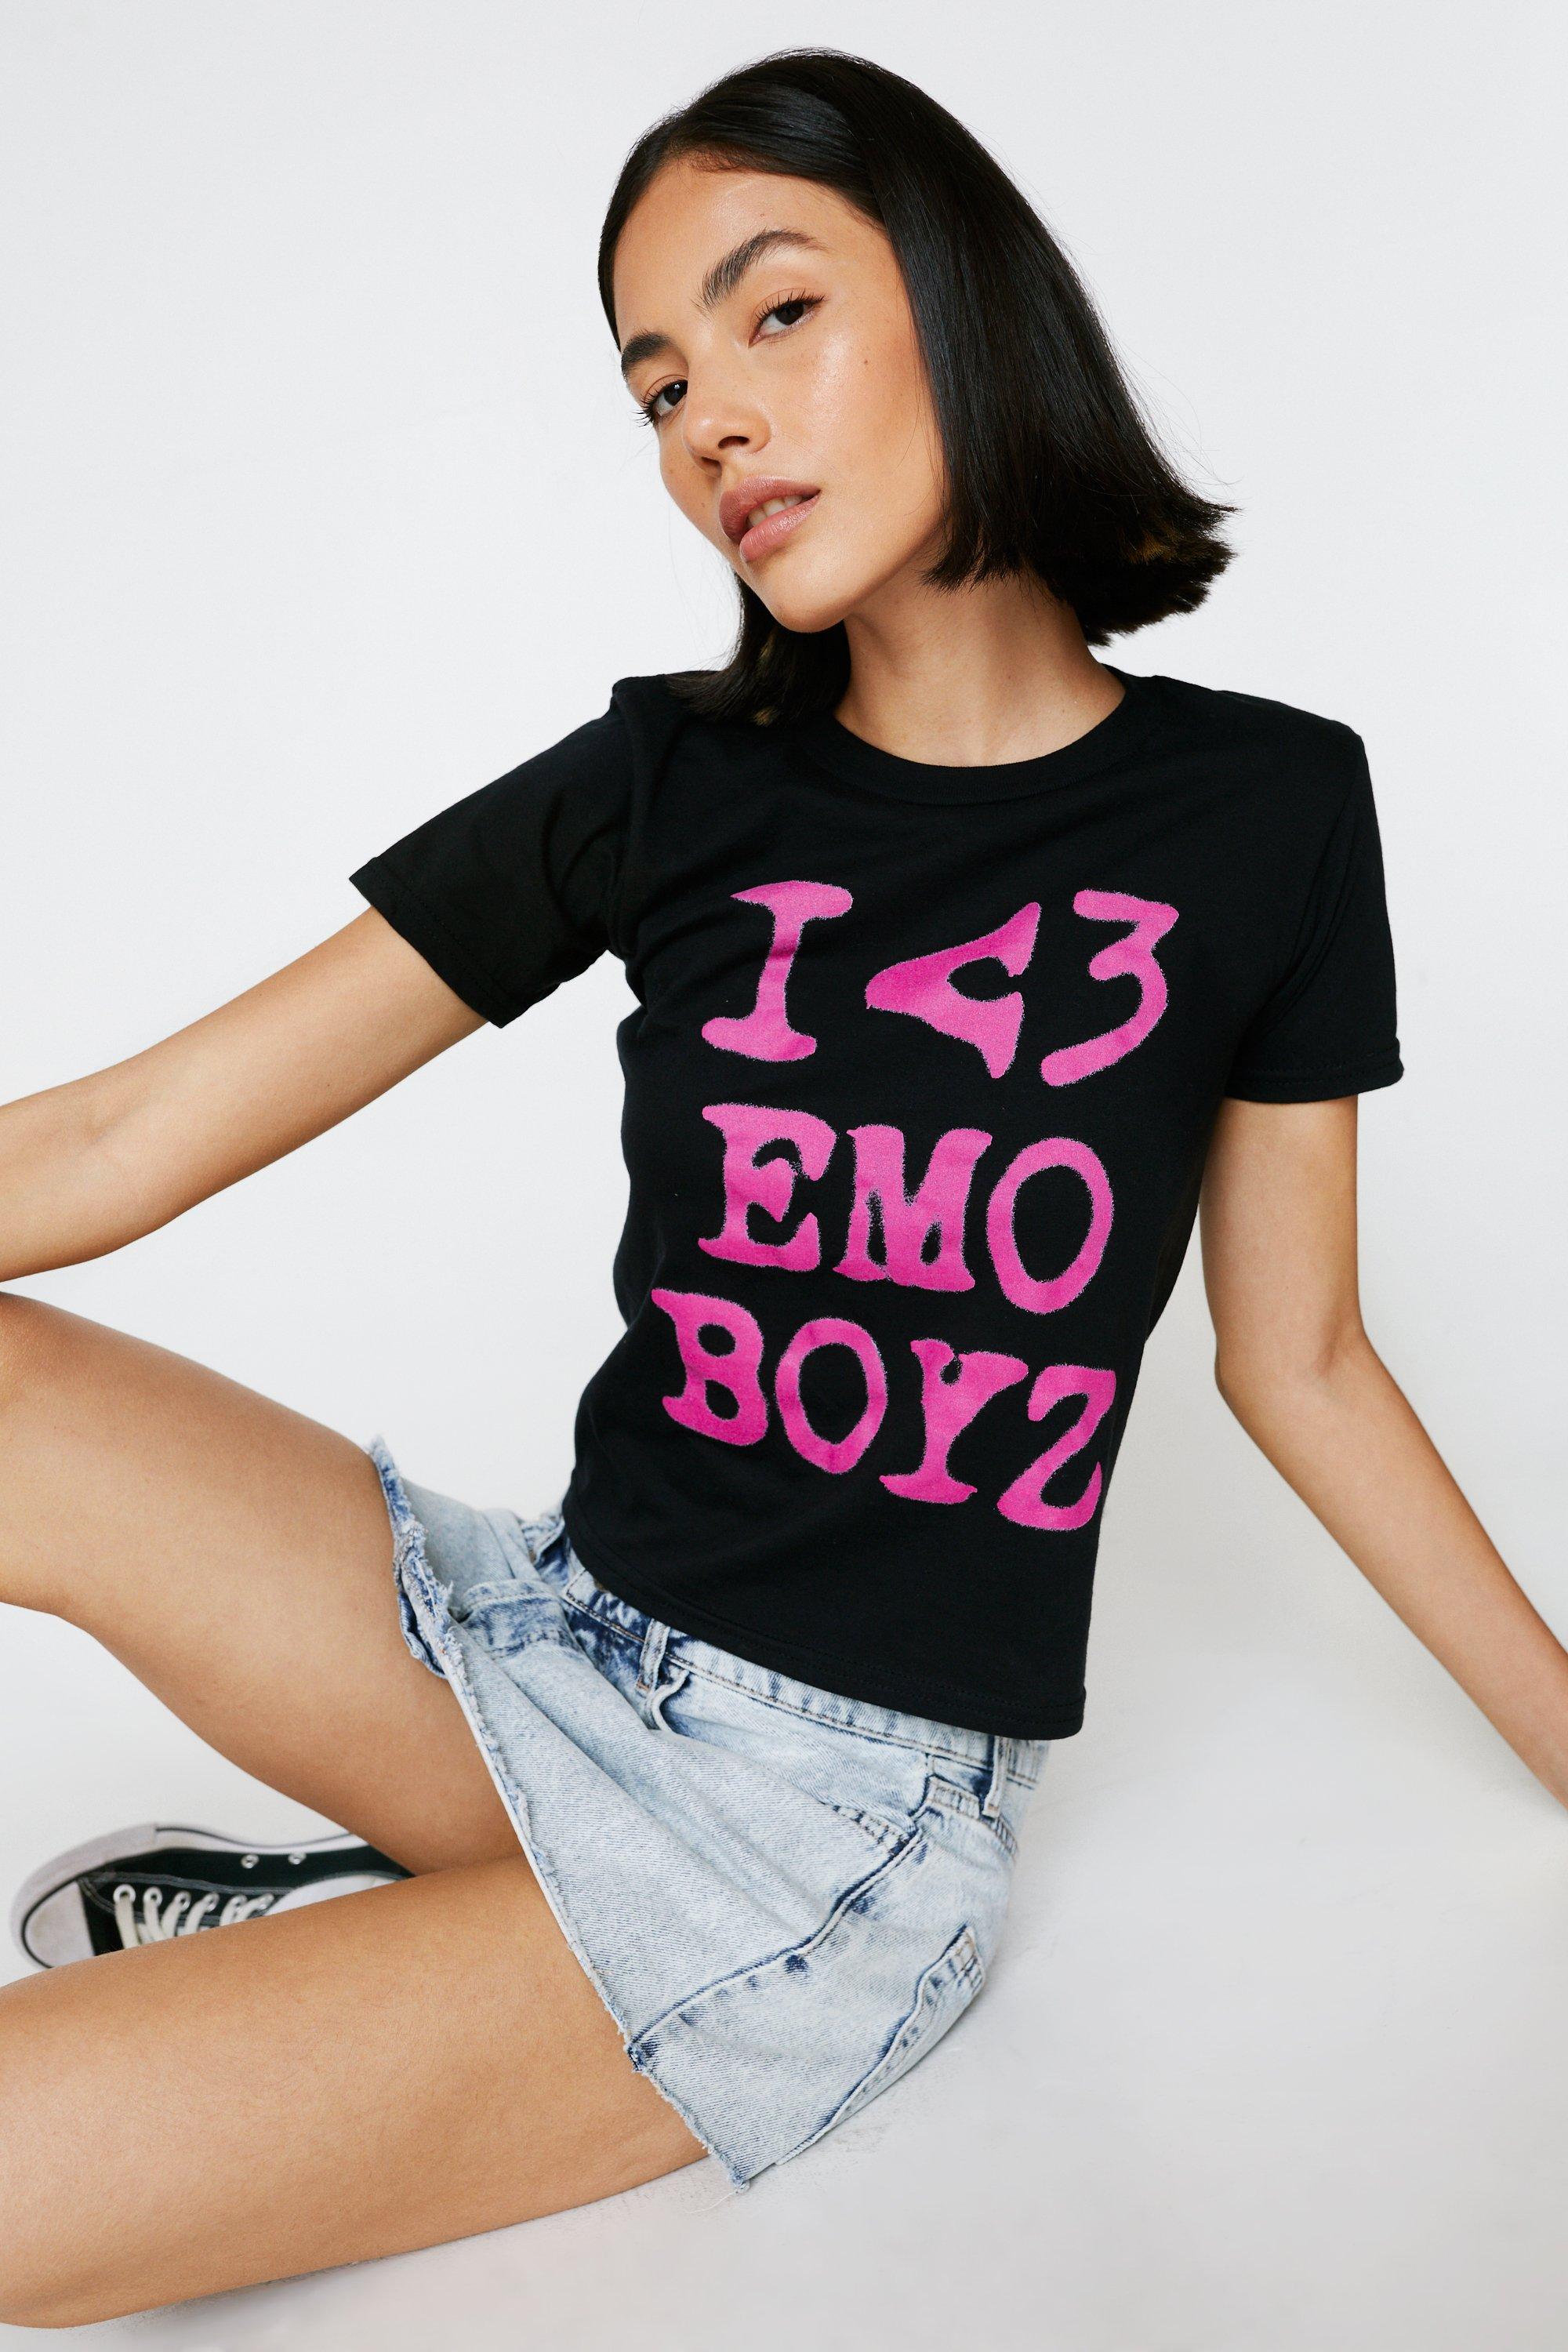  I Love Emo Boys T-Shirt : Clothing, Shoes & Jewelry